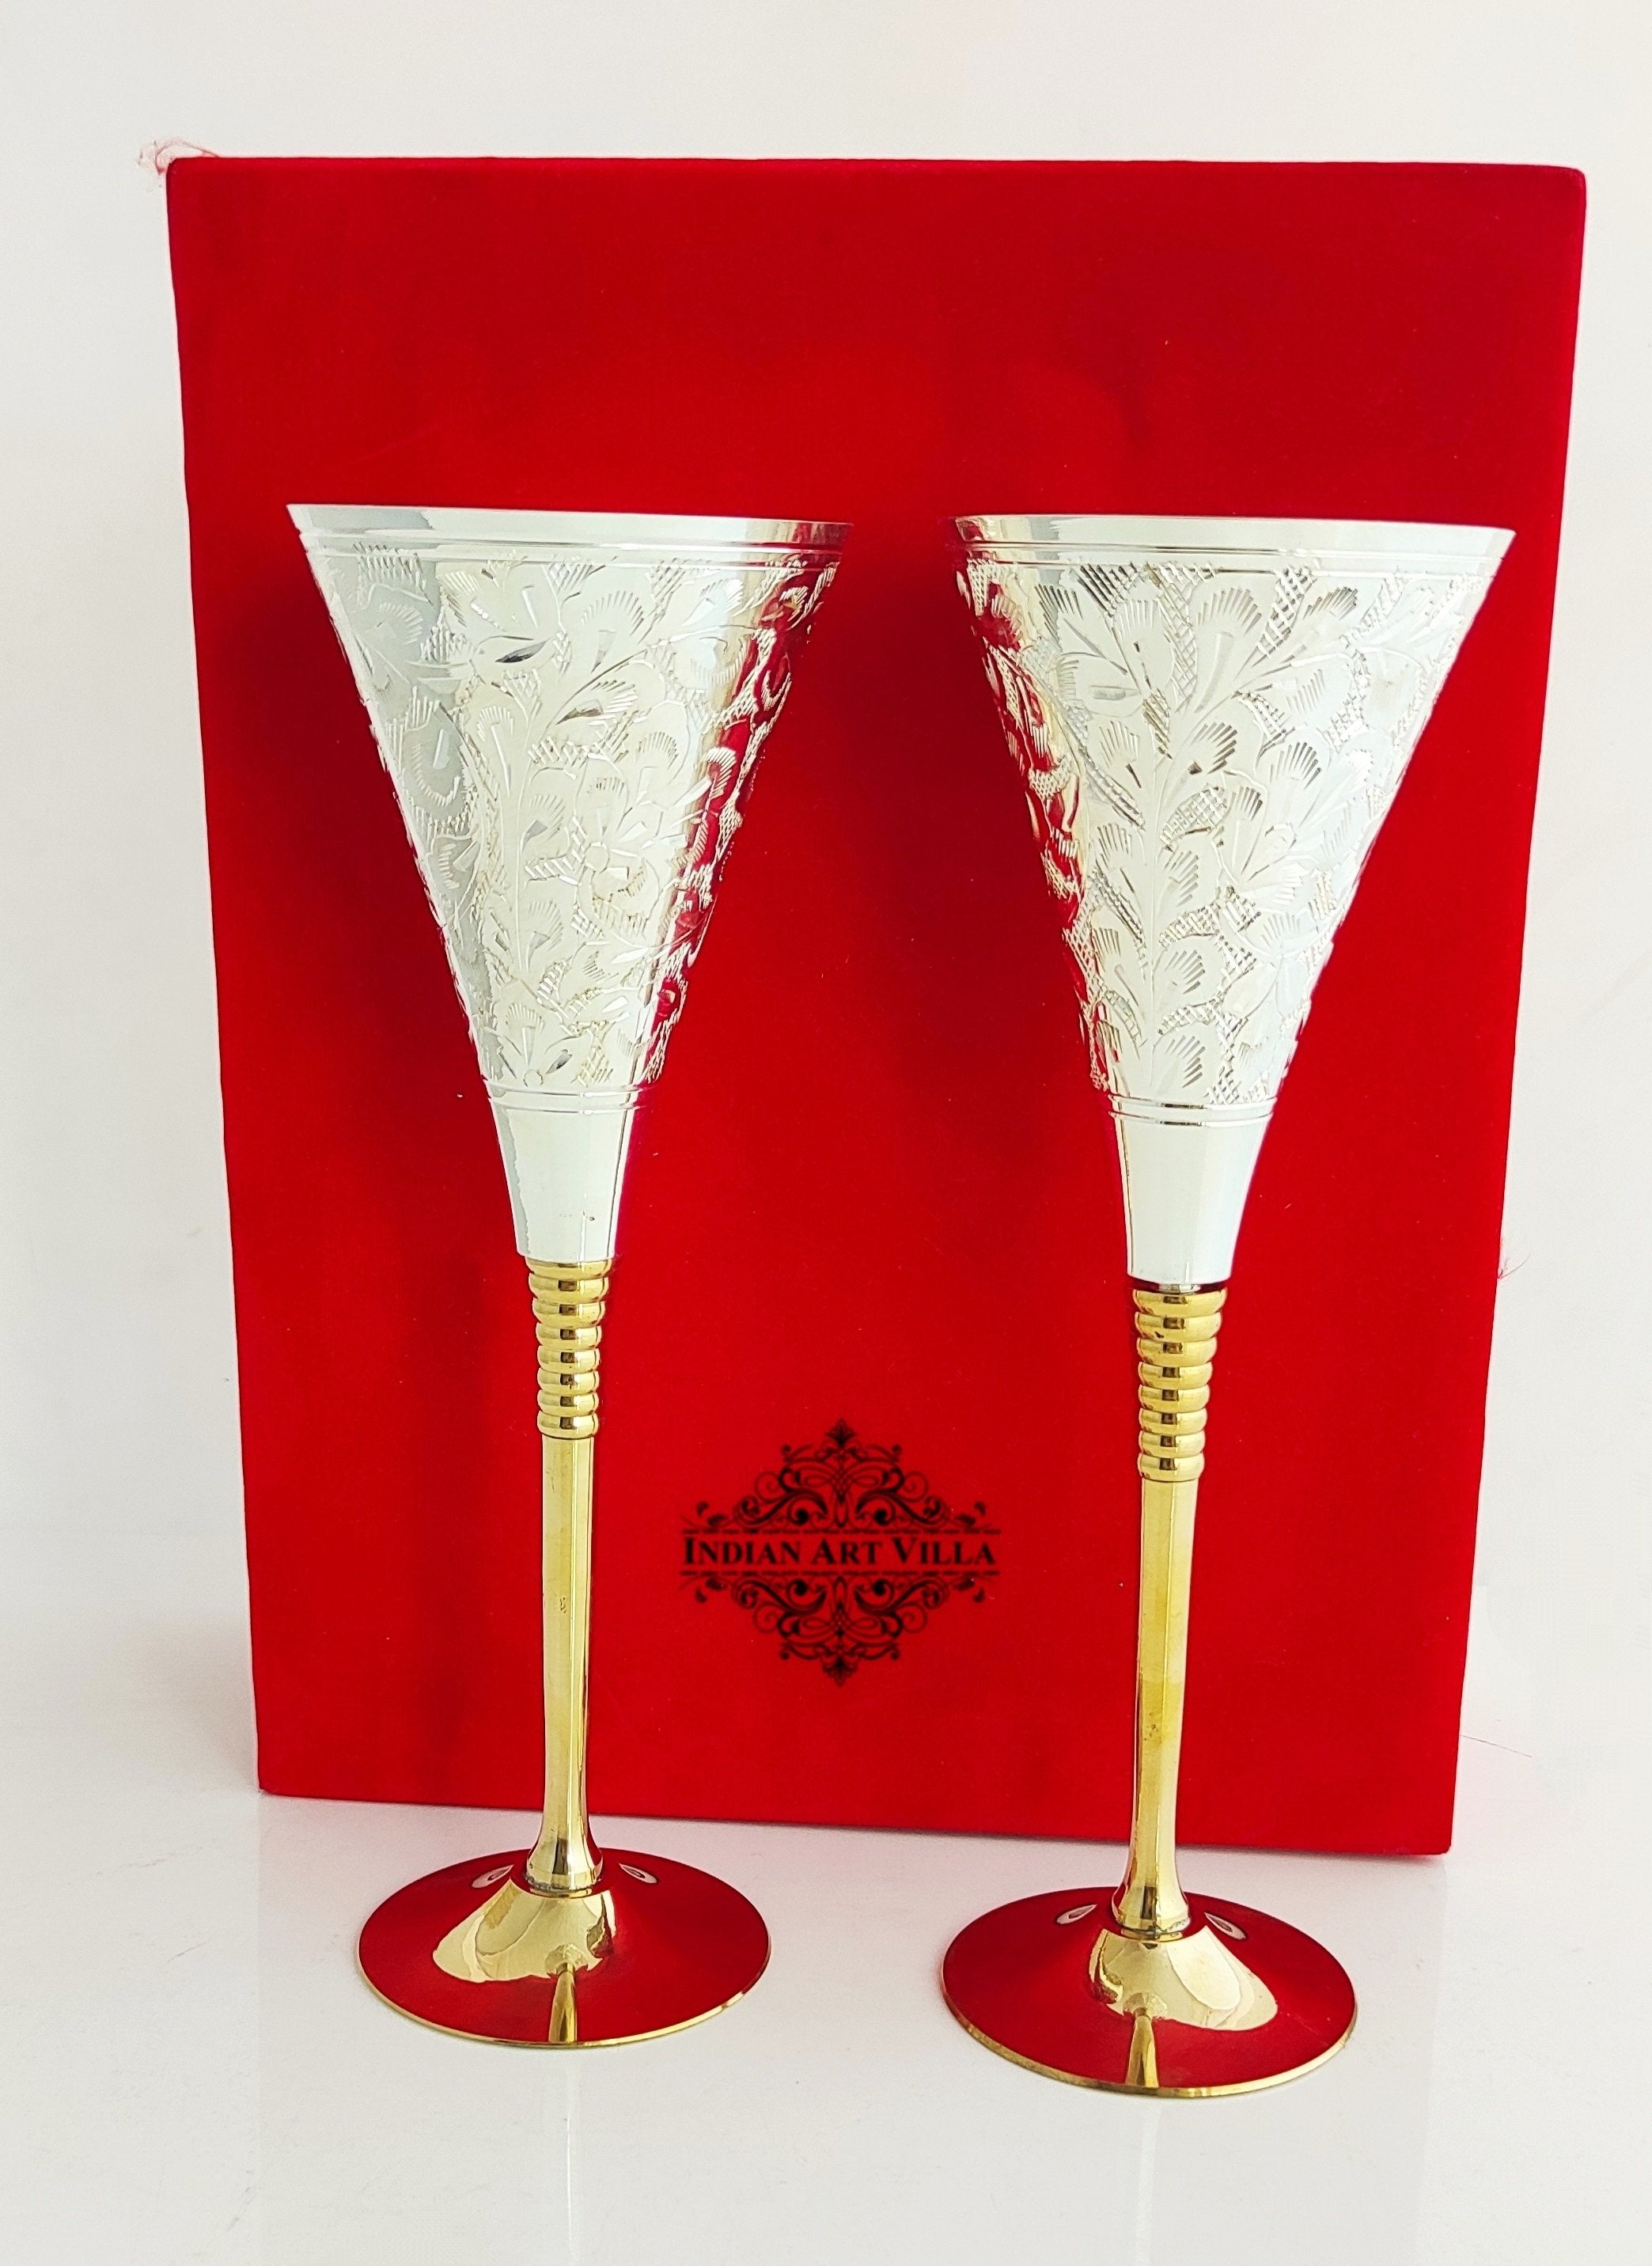 Buy Indian Art Villa Silver Plated Engraved Goblet / Flute Glass